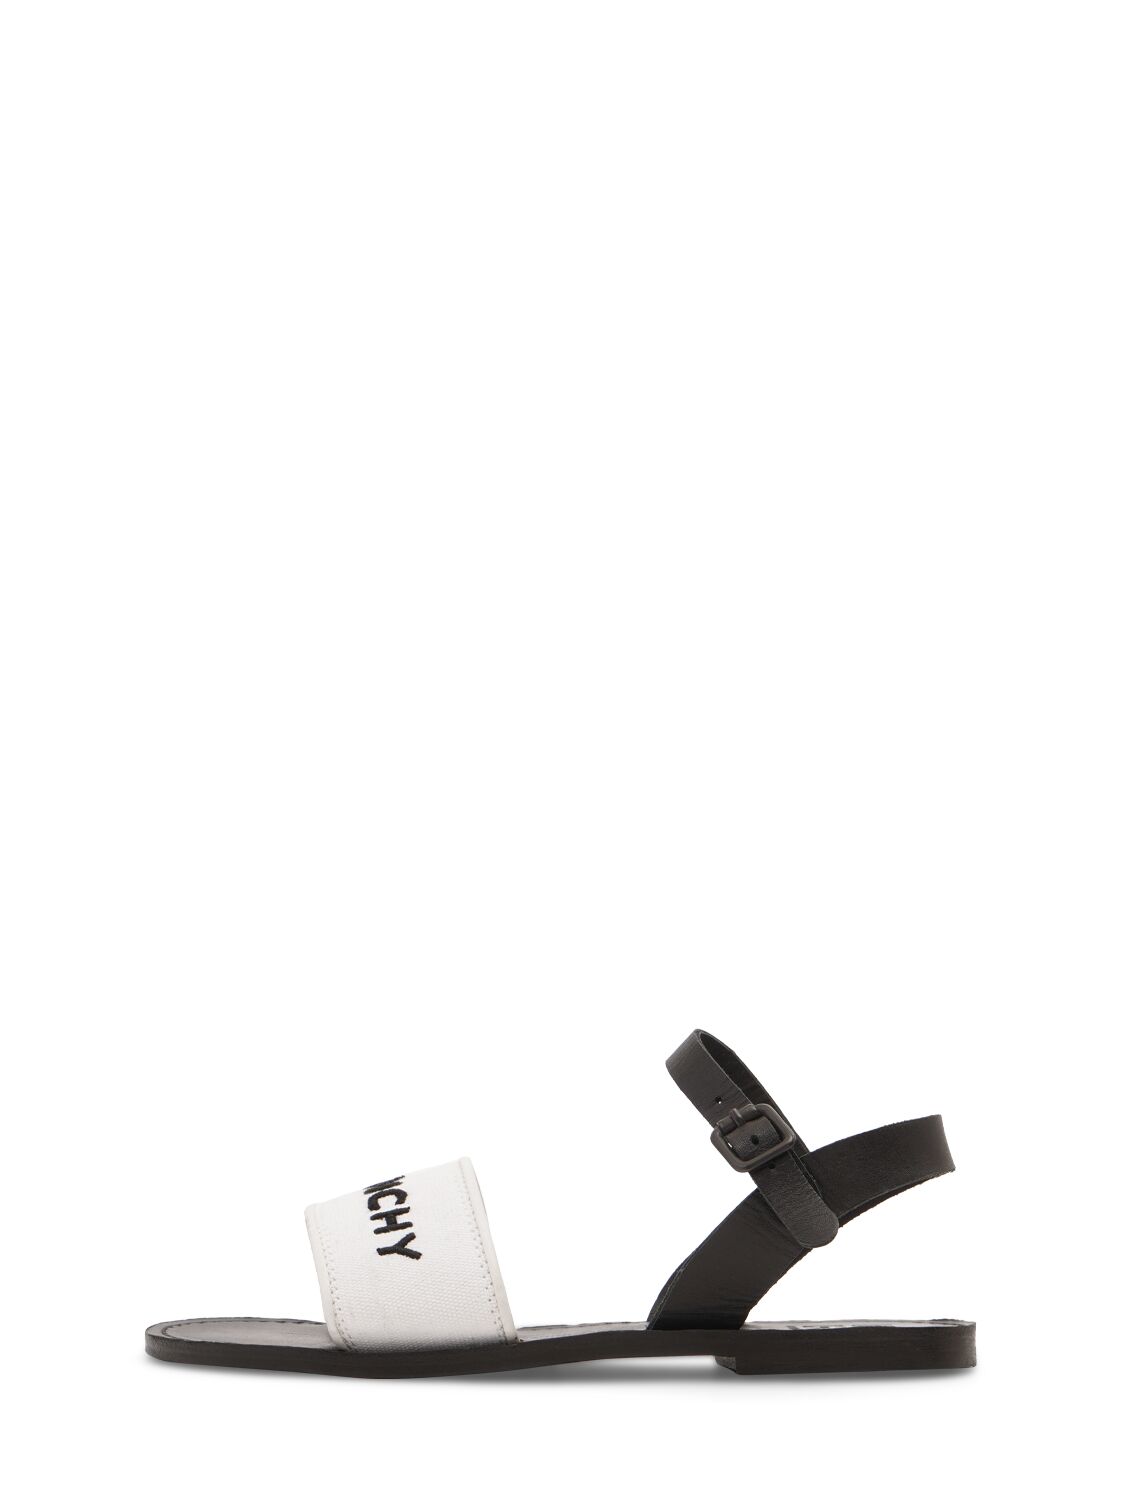 Givenchy Logo皮革&帆布凉鞋 In Black/white